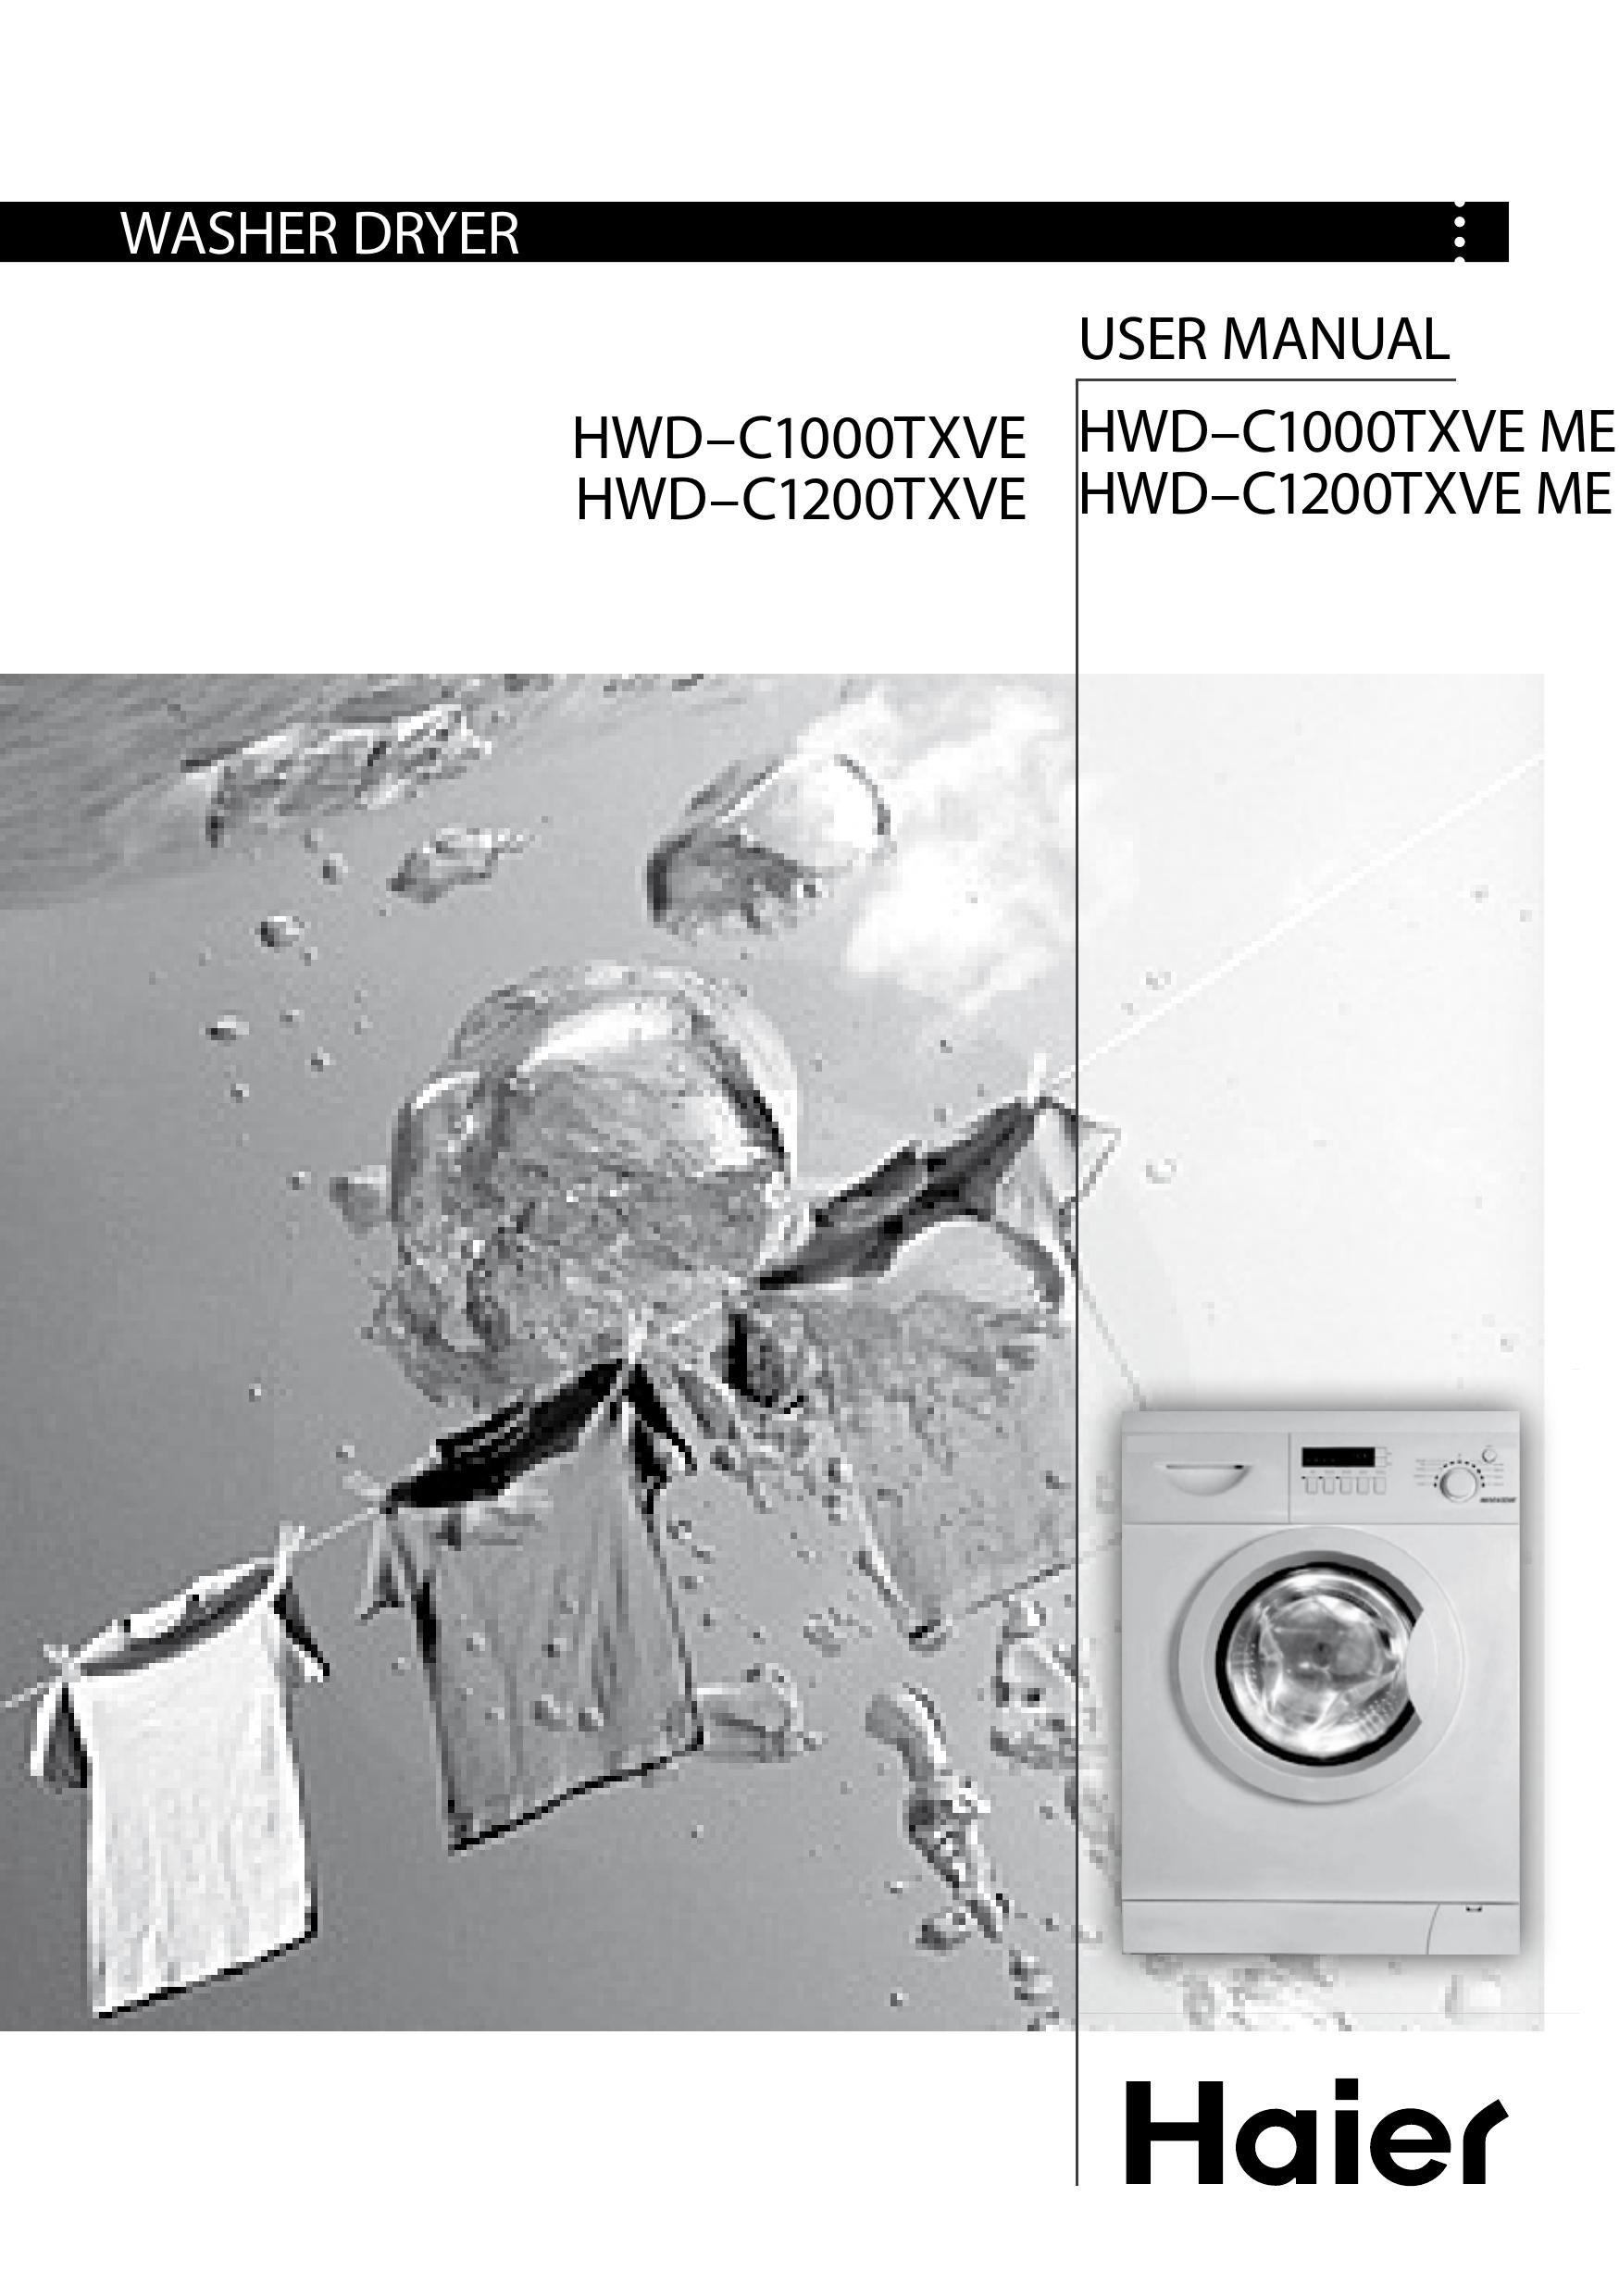 Haier HWDC1200TXVE ME Washer/Dryer User Manual